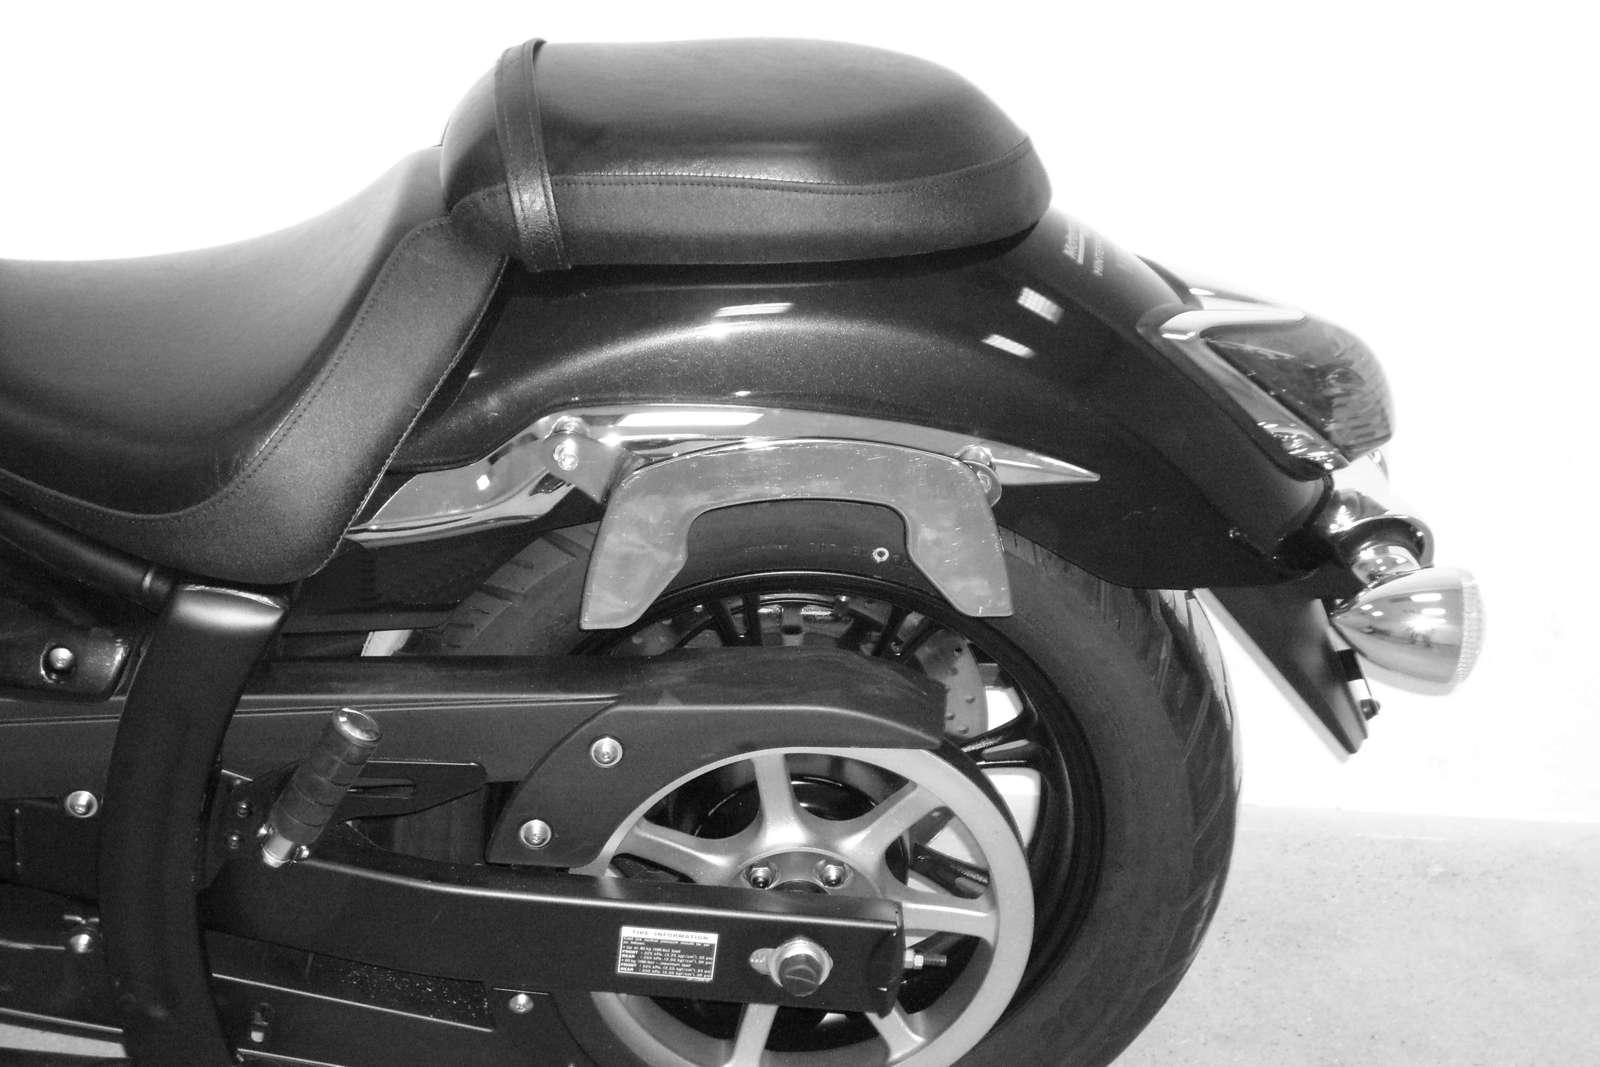 C-Bow sidecarrier for Yamaha XVS 950 A Midnight Star (2009-)